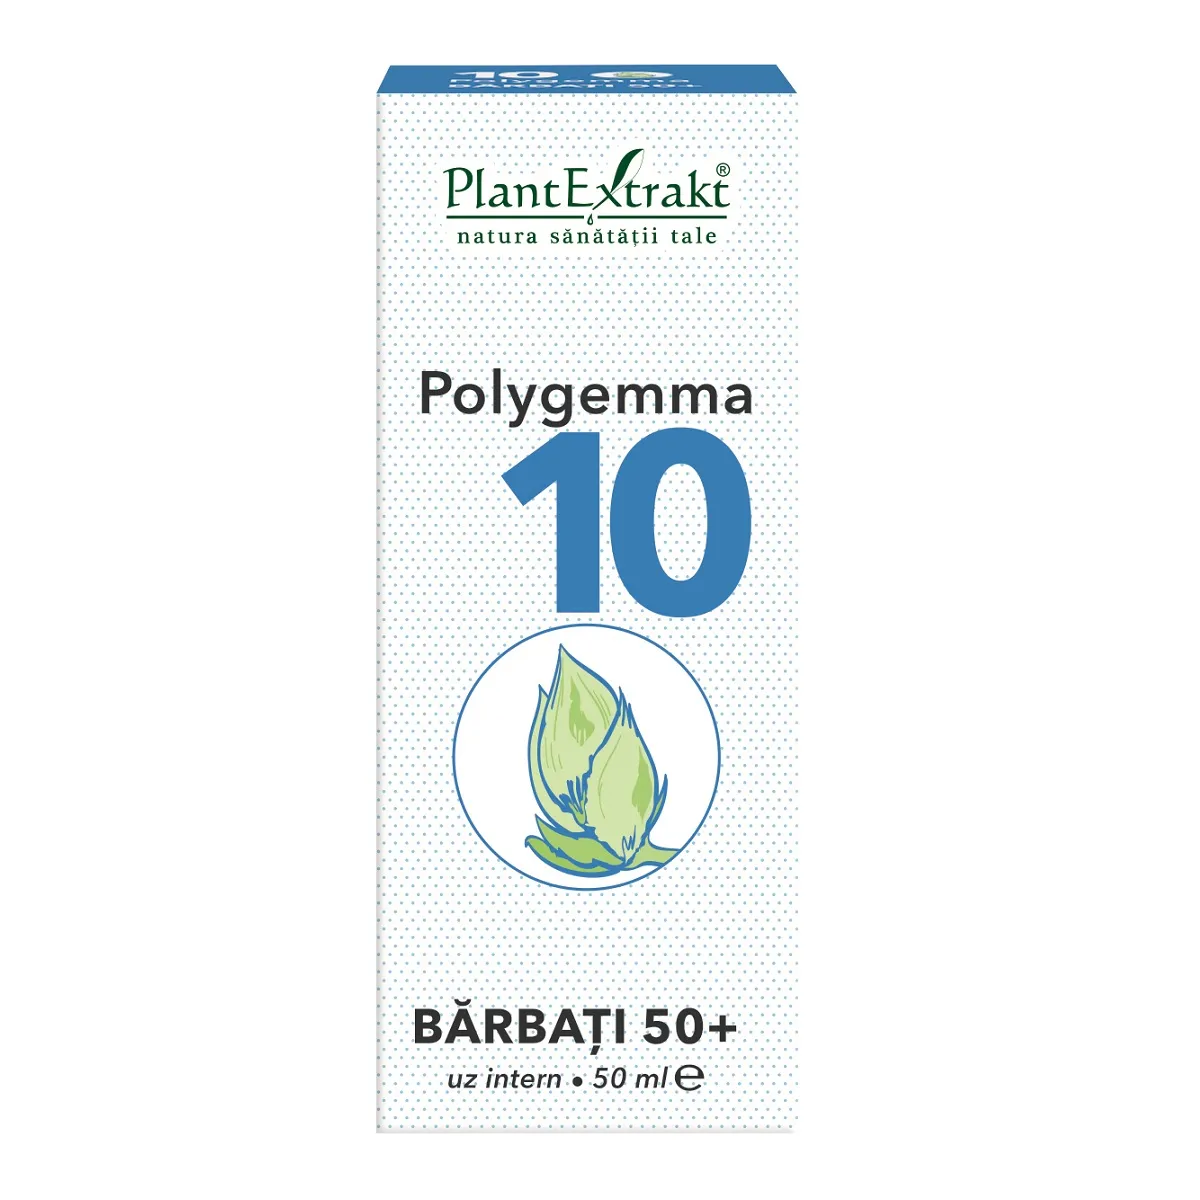 Polygemma 10 pentru barbati 50+, 50ml, PlantExtrakt